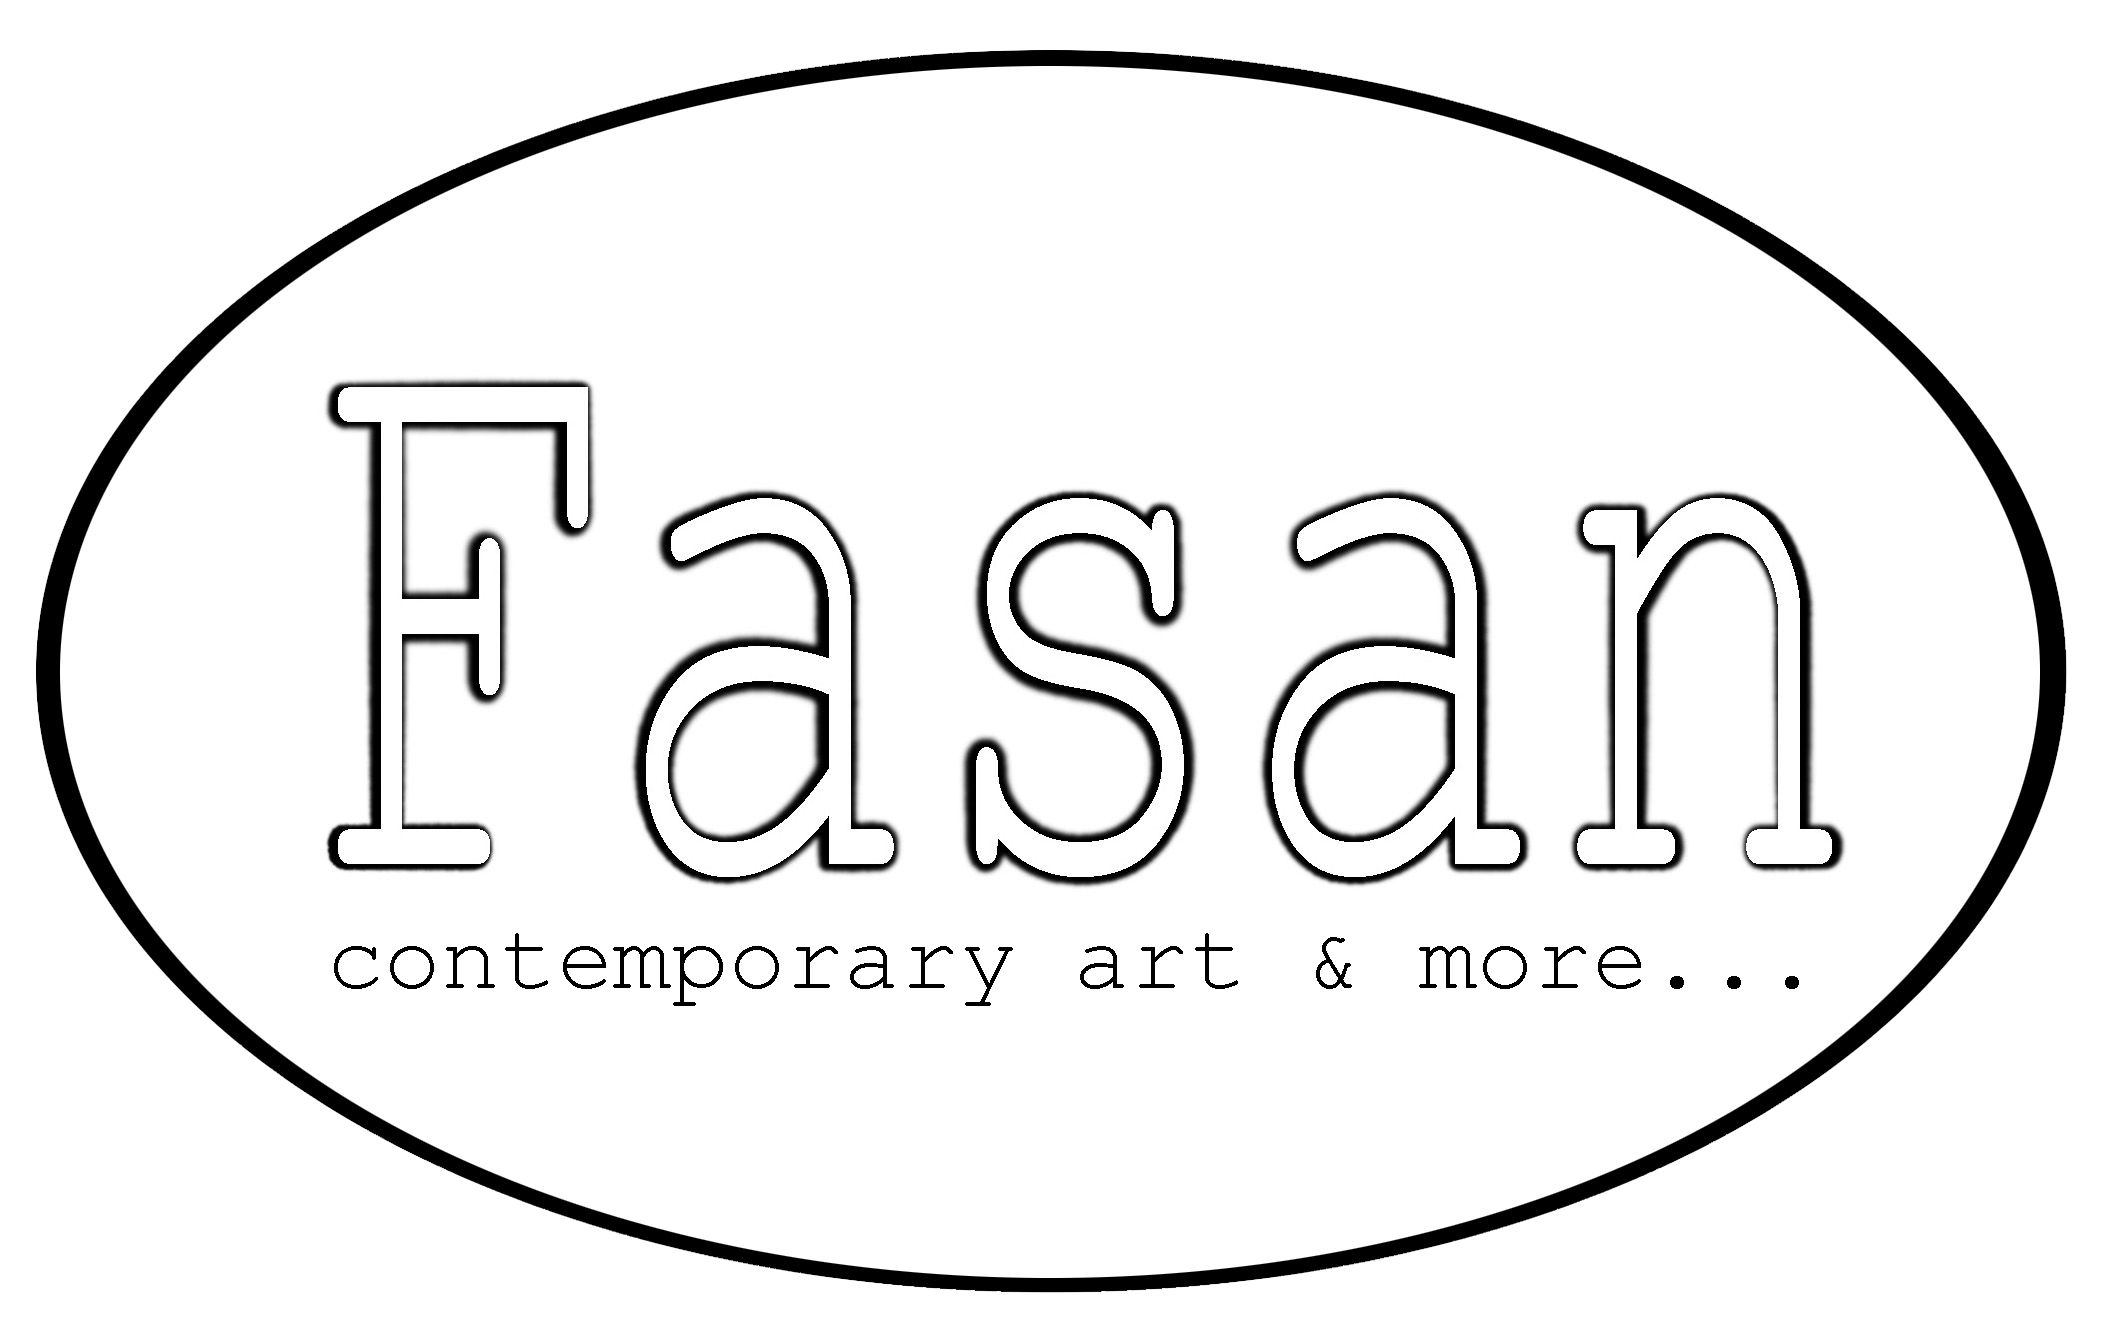 Fasan - contemporary art & more